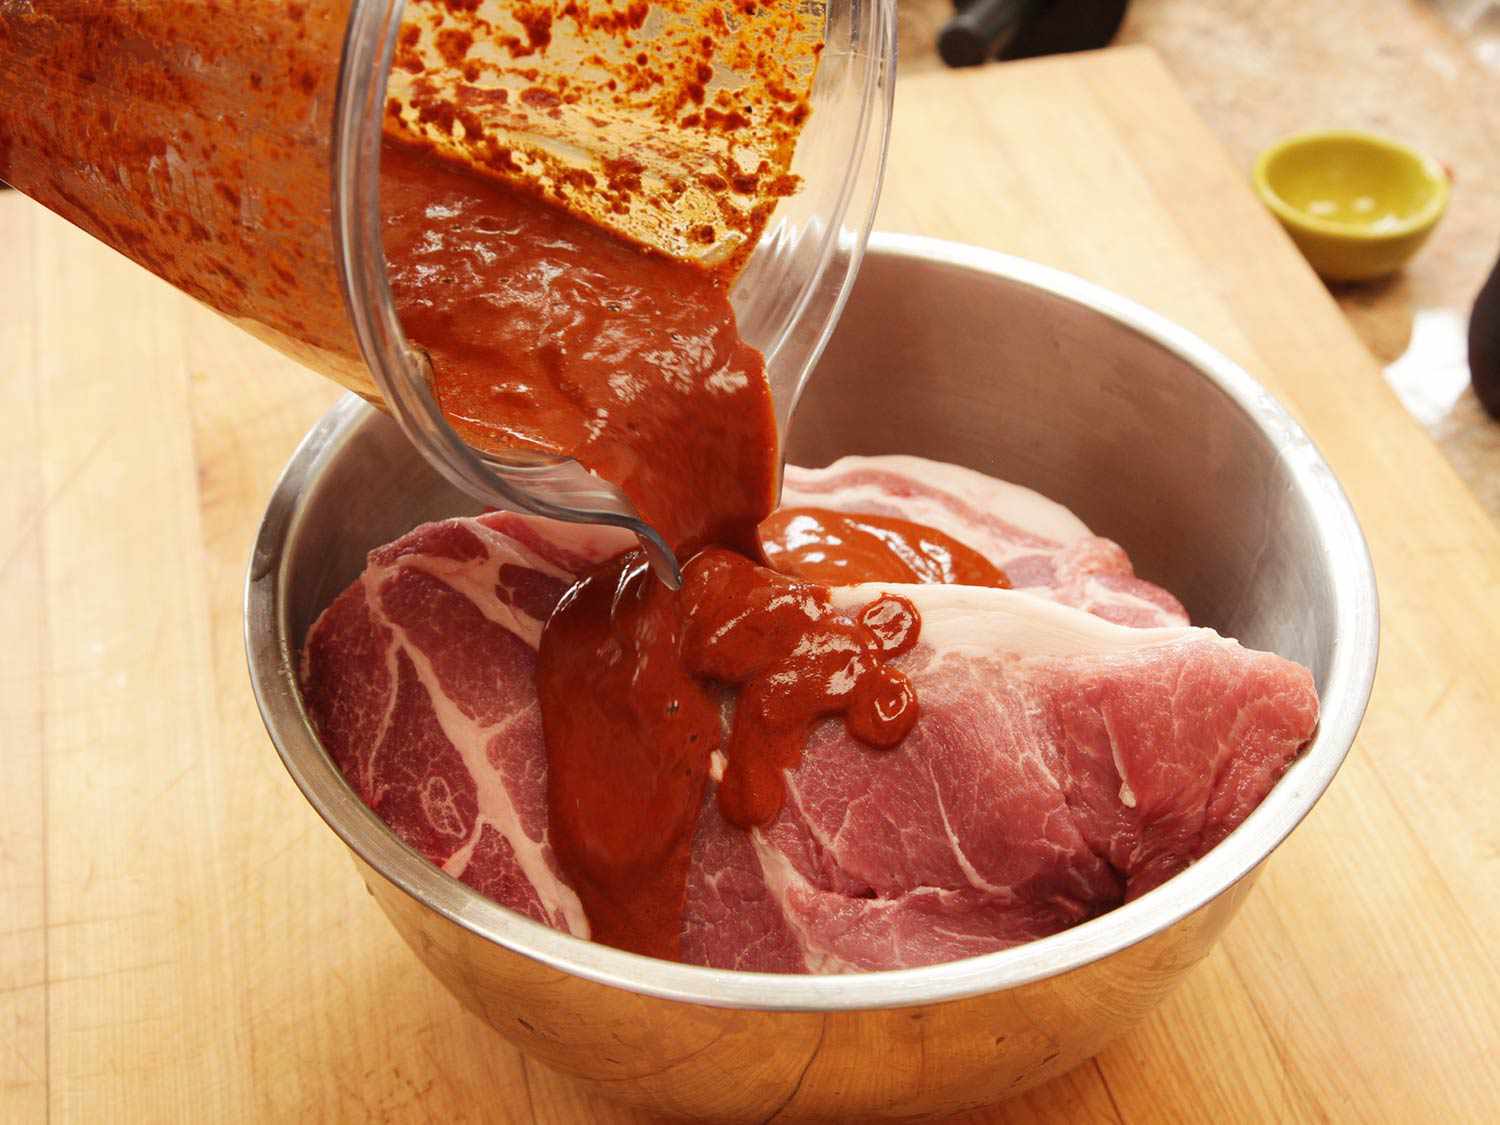 Pouring sauce on the raw pork for cochinita pibil recipe.